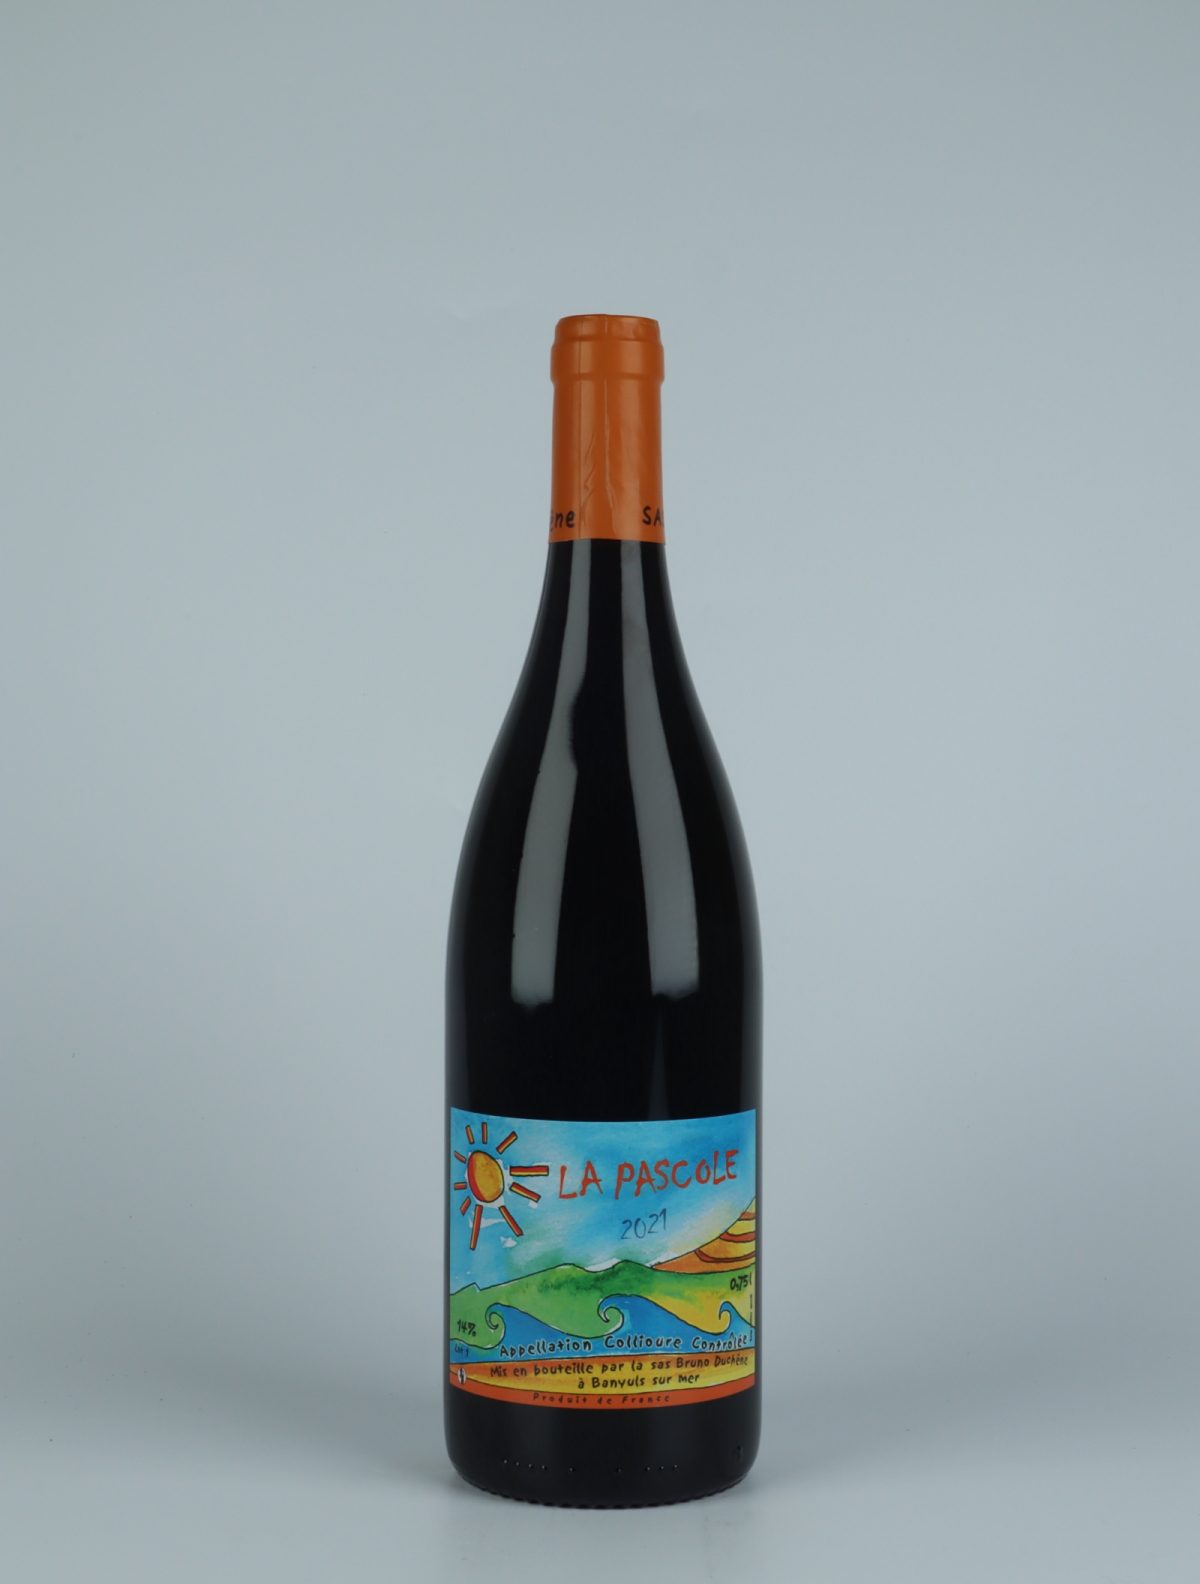 A bottle 2021 La Pascole Red wine from Bruno Duchêne, Rousillon in France